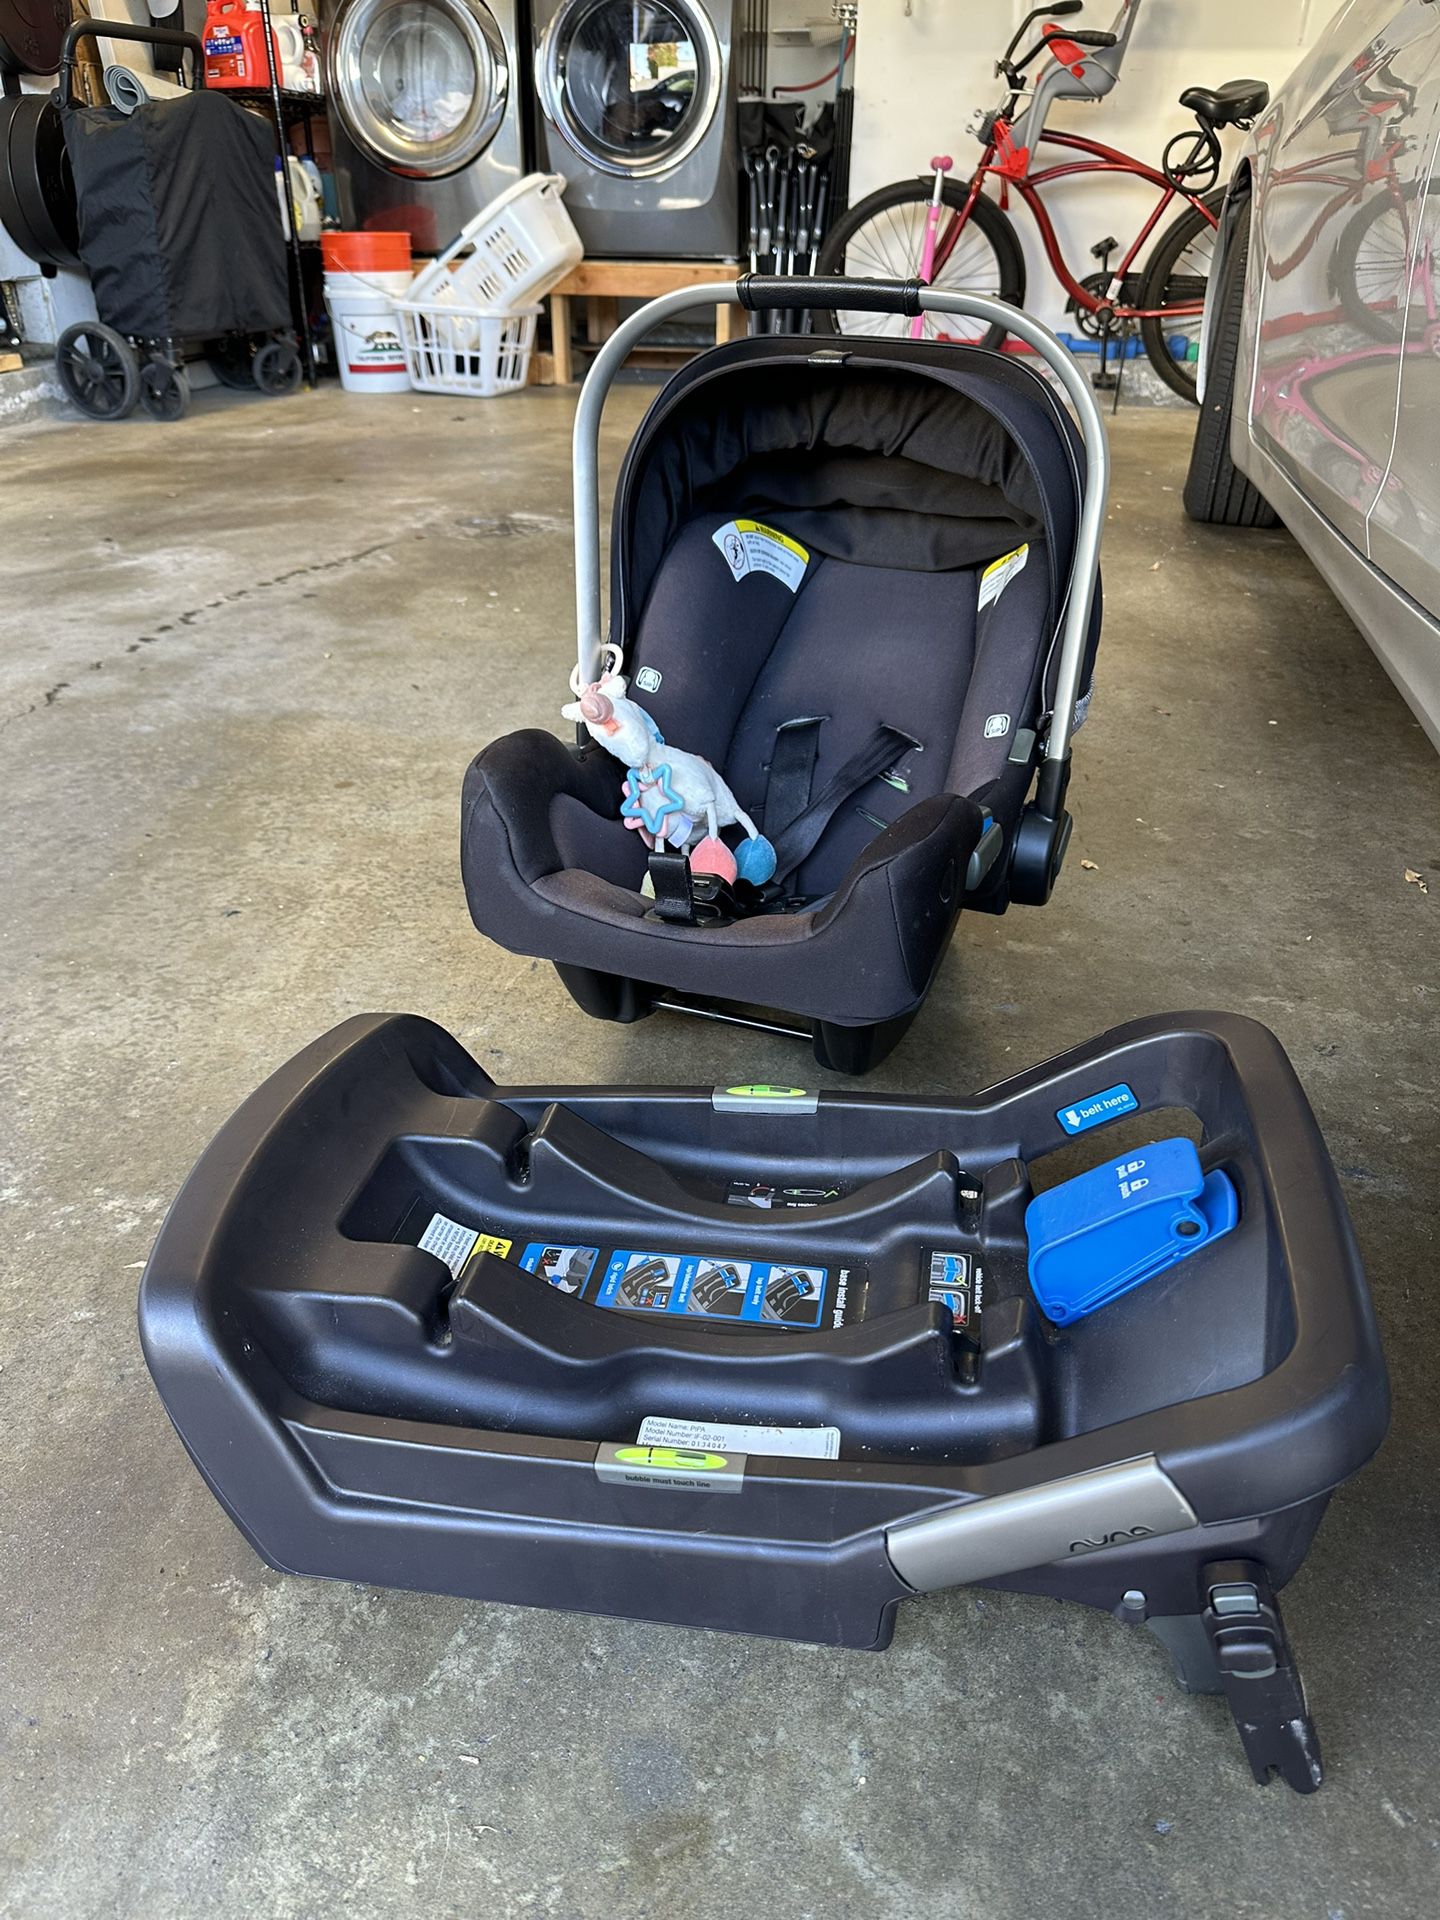 Nuna Pipa Lite Infant Car Seat and Base